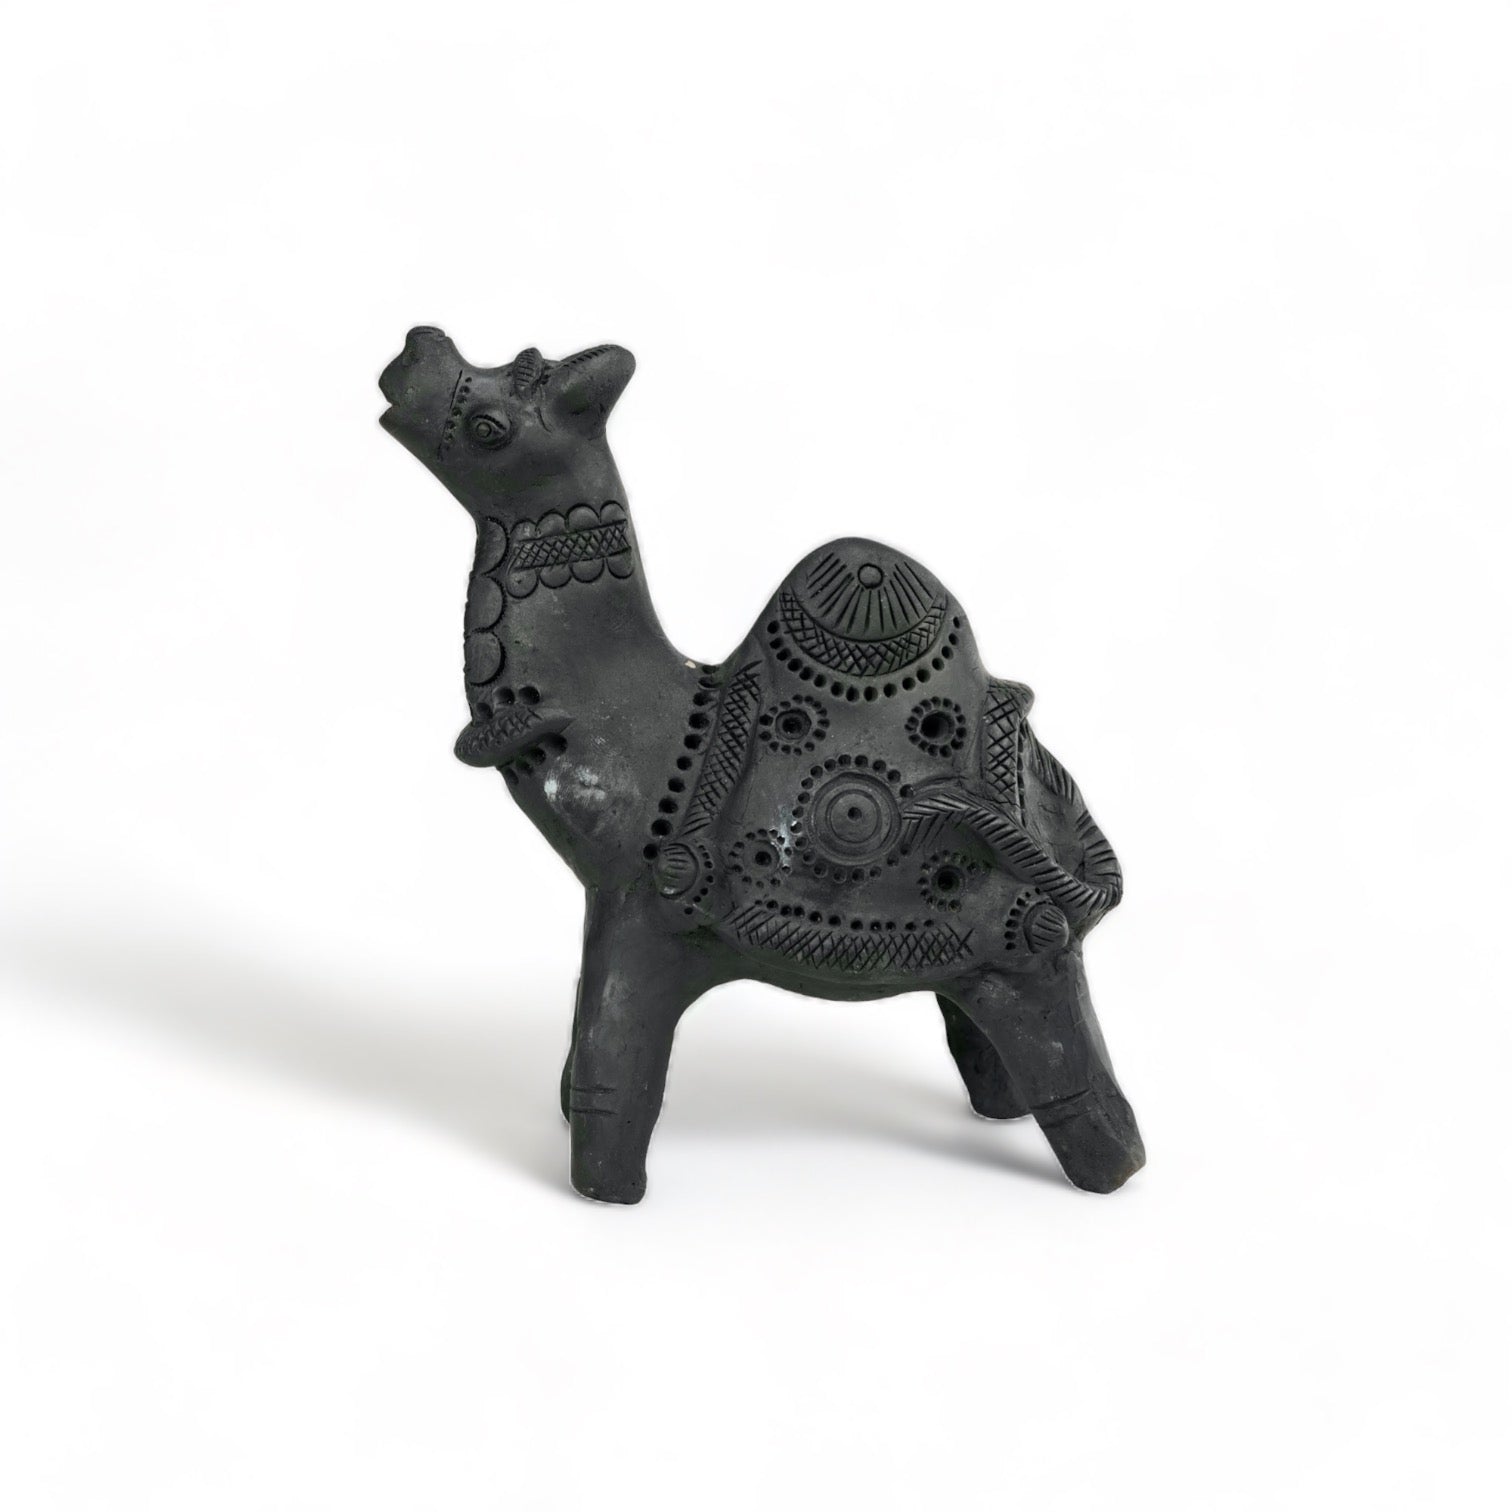 Sawai Madhopur Black Terracotta Camel Figurine